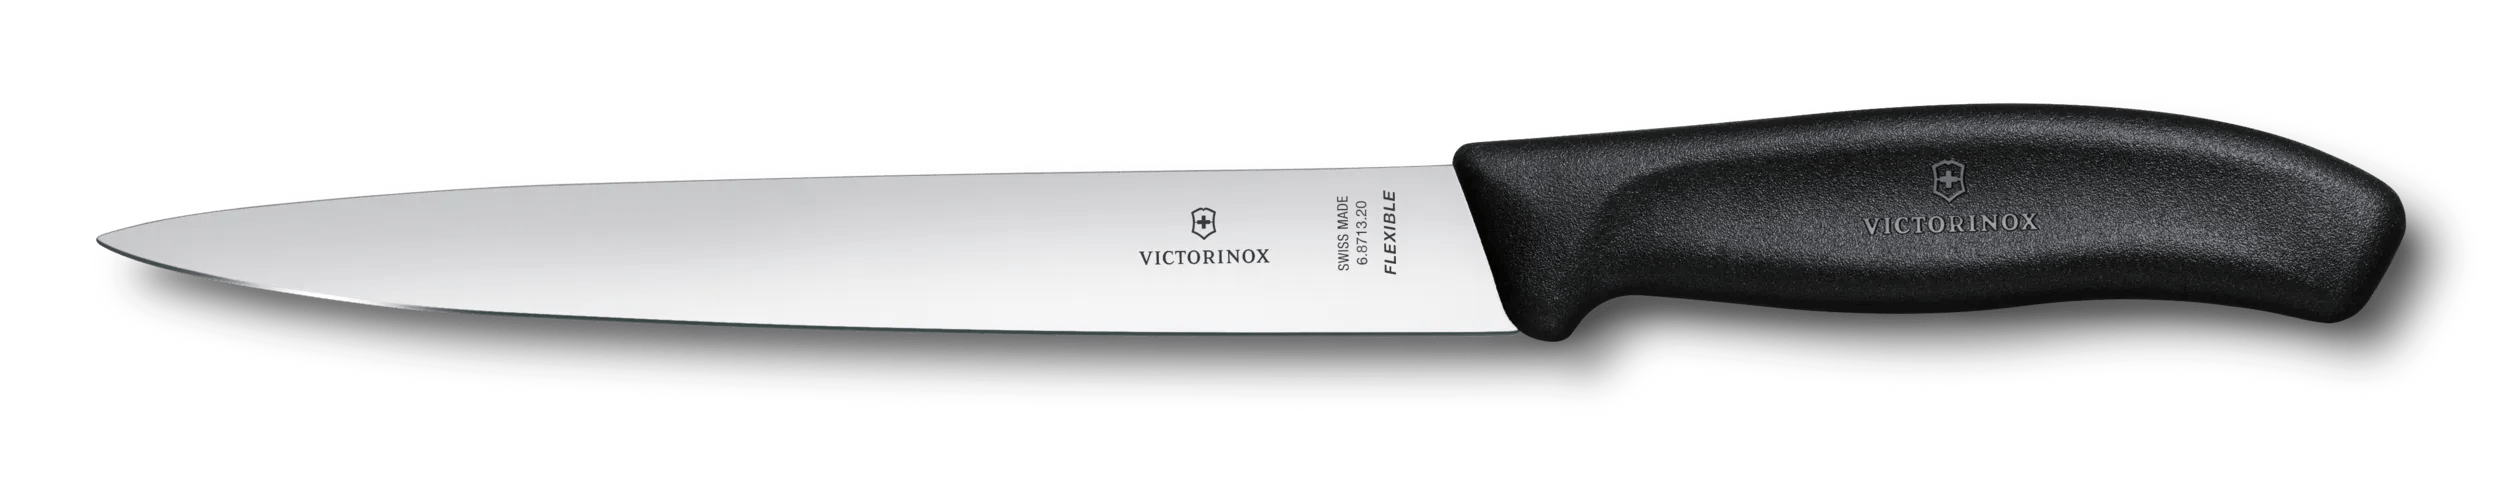 Victorinox スイスクラシック キッチンナイフ ブラック - 6.8003.15G